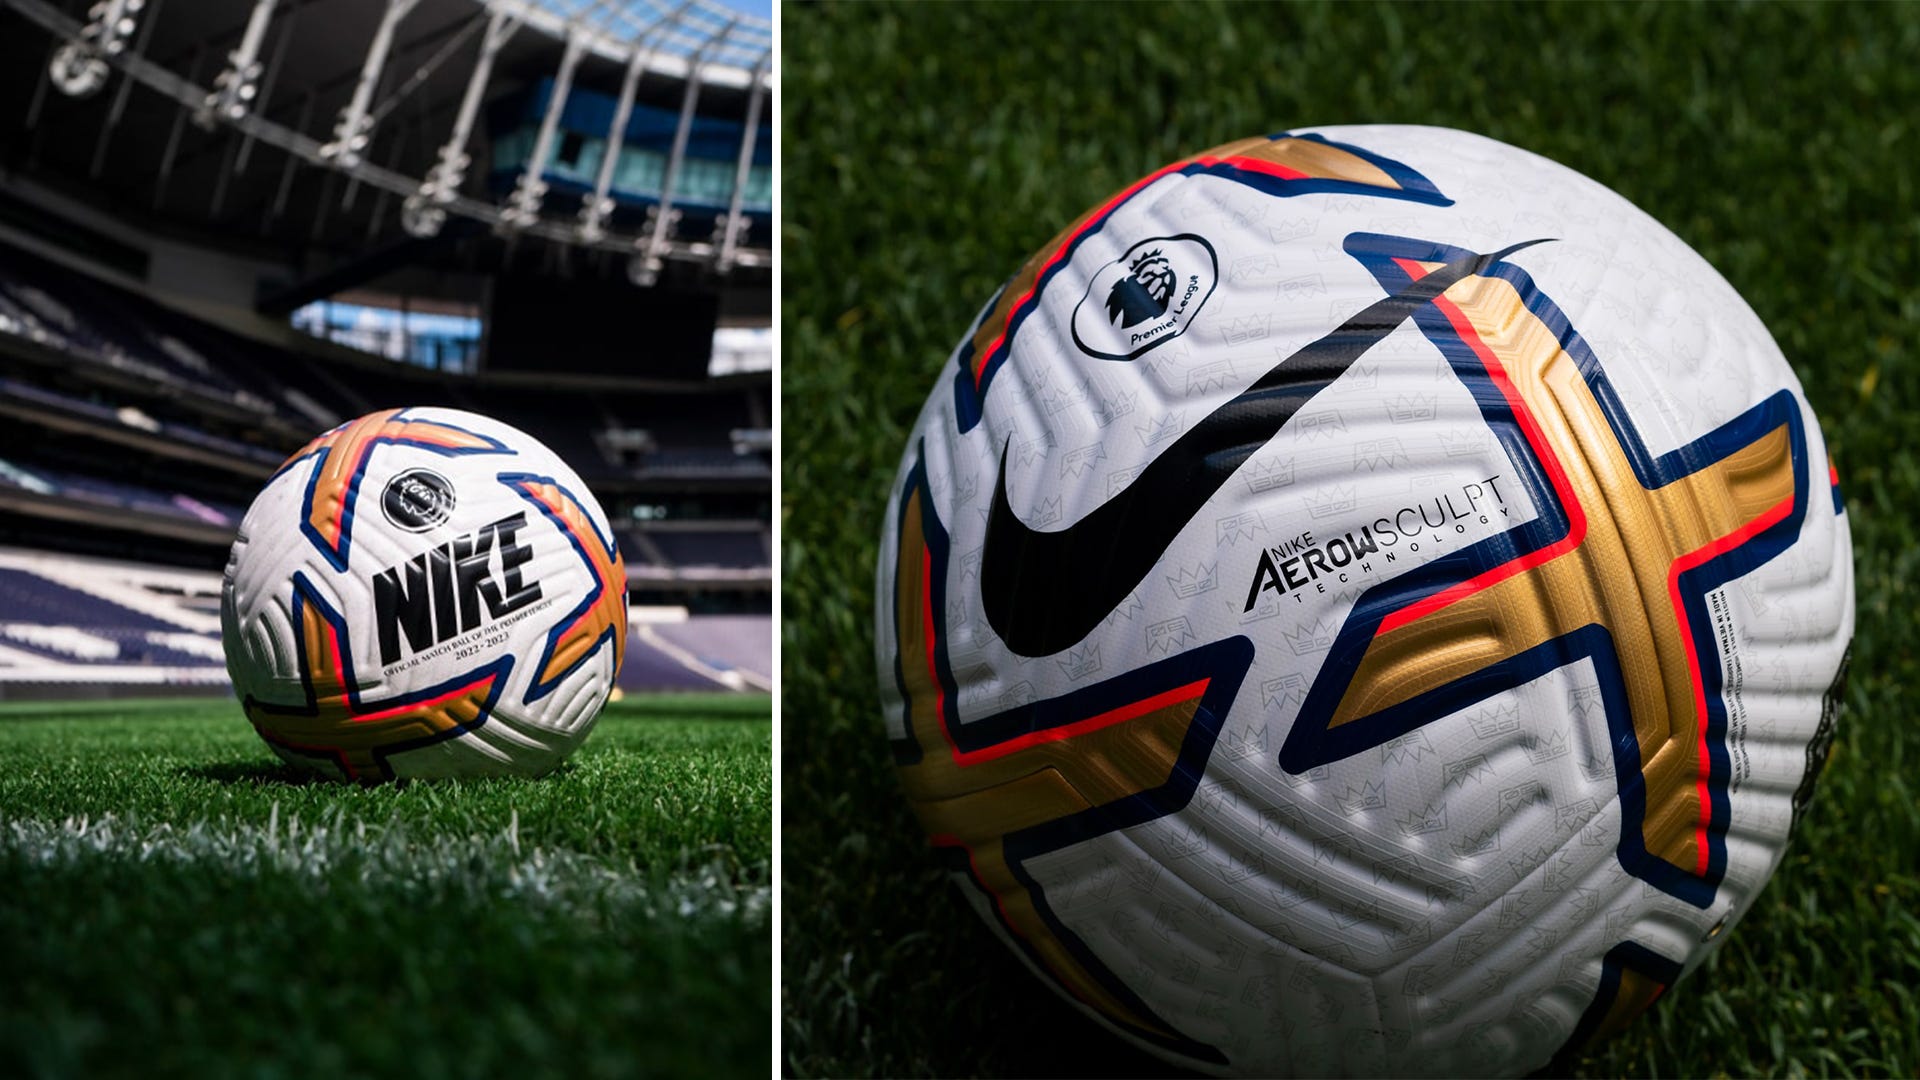 Nike reveal new Premier League match ball for 202223 season